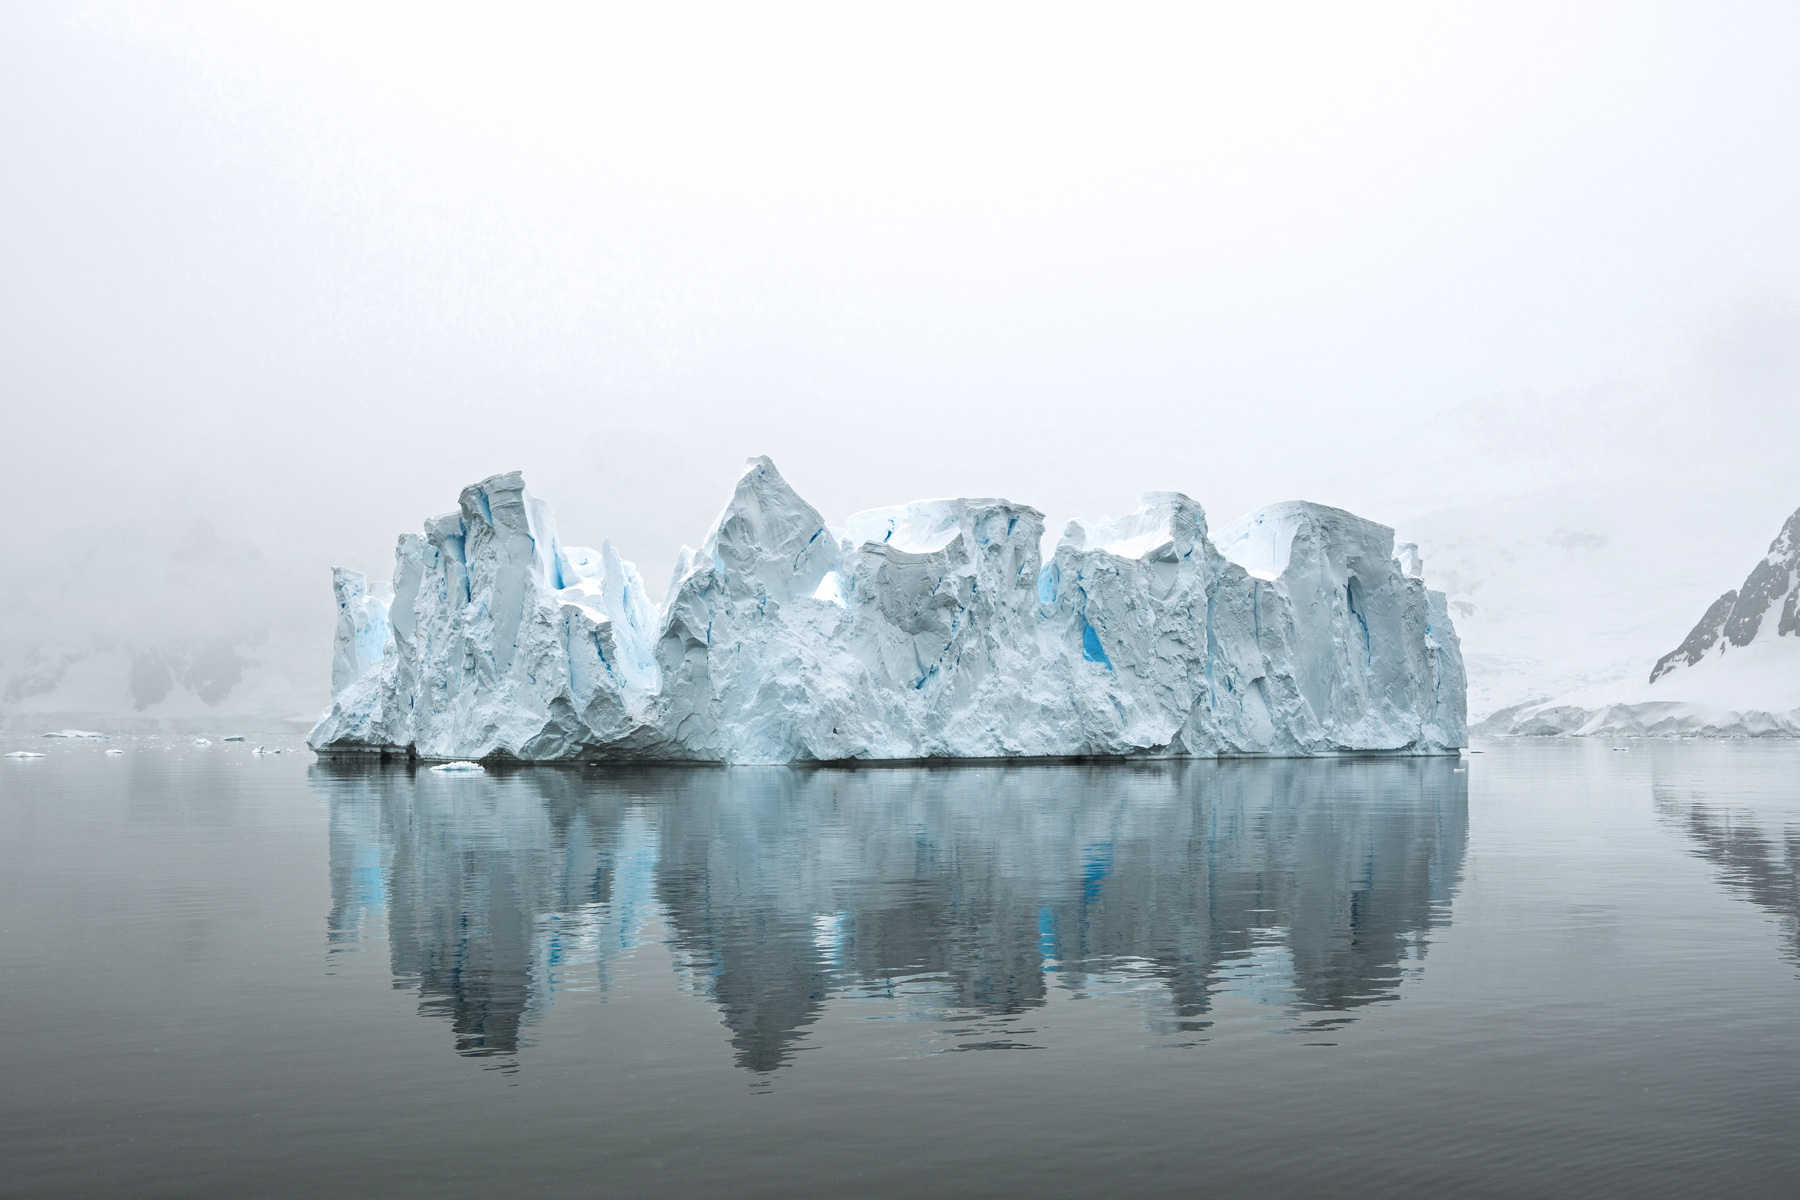 An iceberg in Antarctica